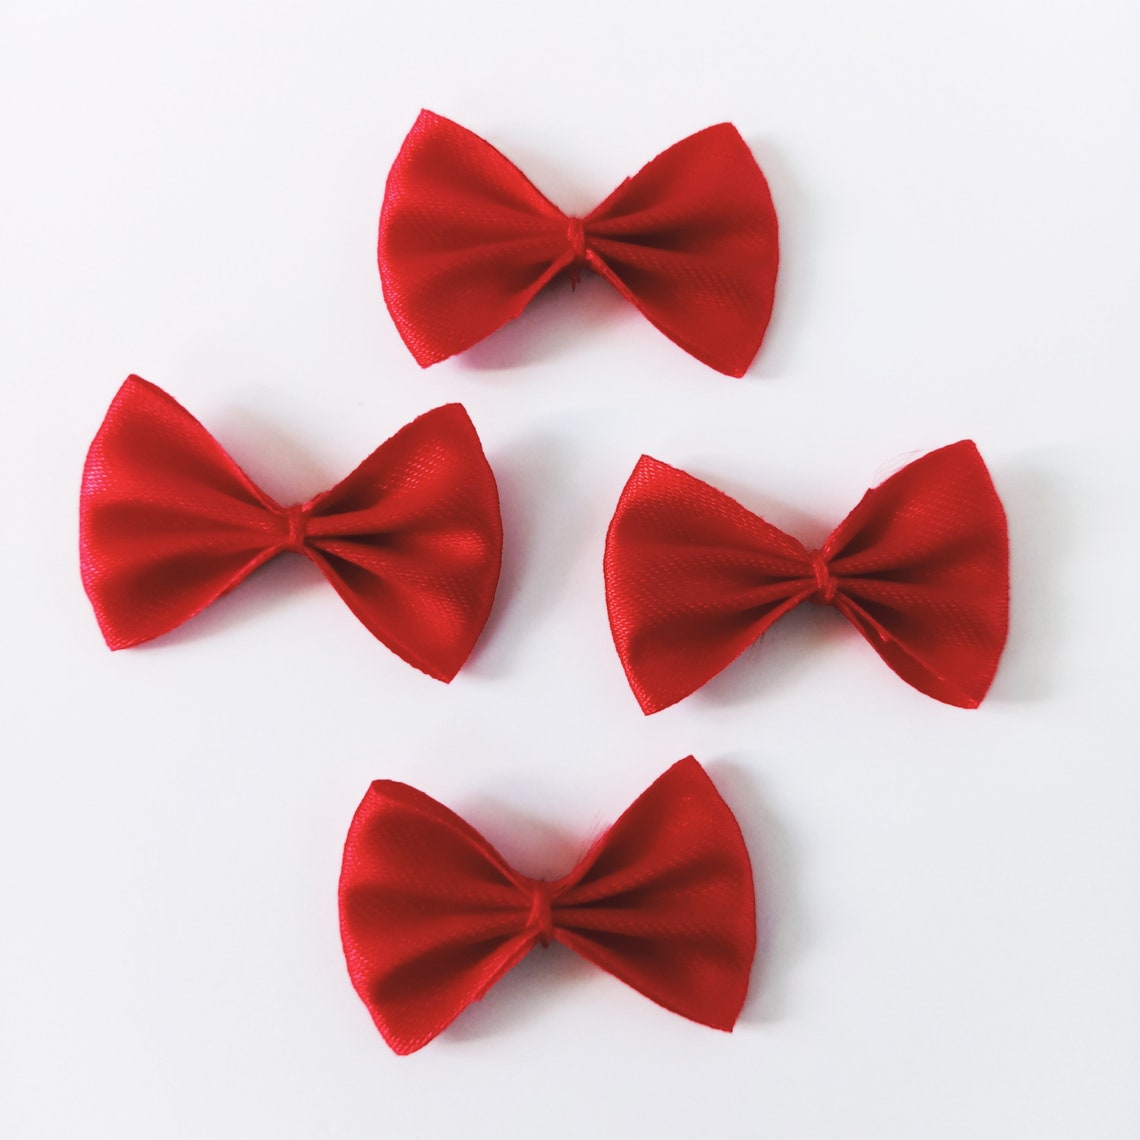 10 Red Bow Ties 1.5 Inchesmini Craft Bowdoll Costumefavor - Etsy